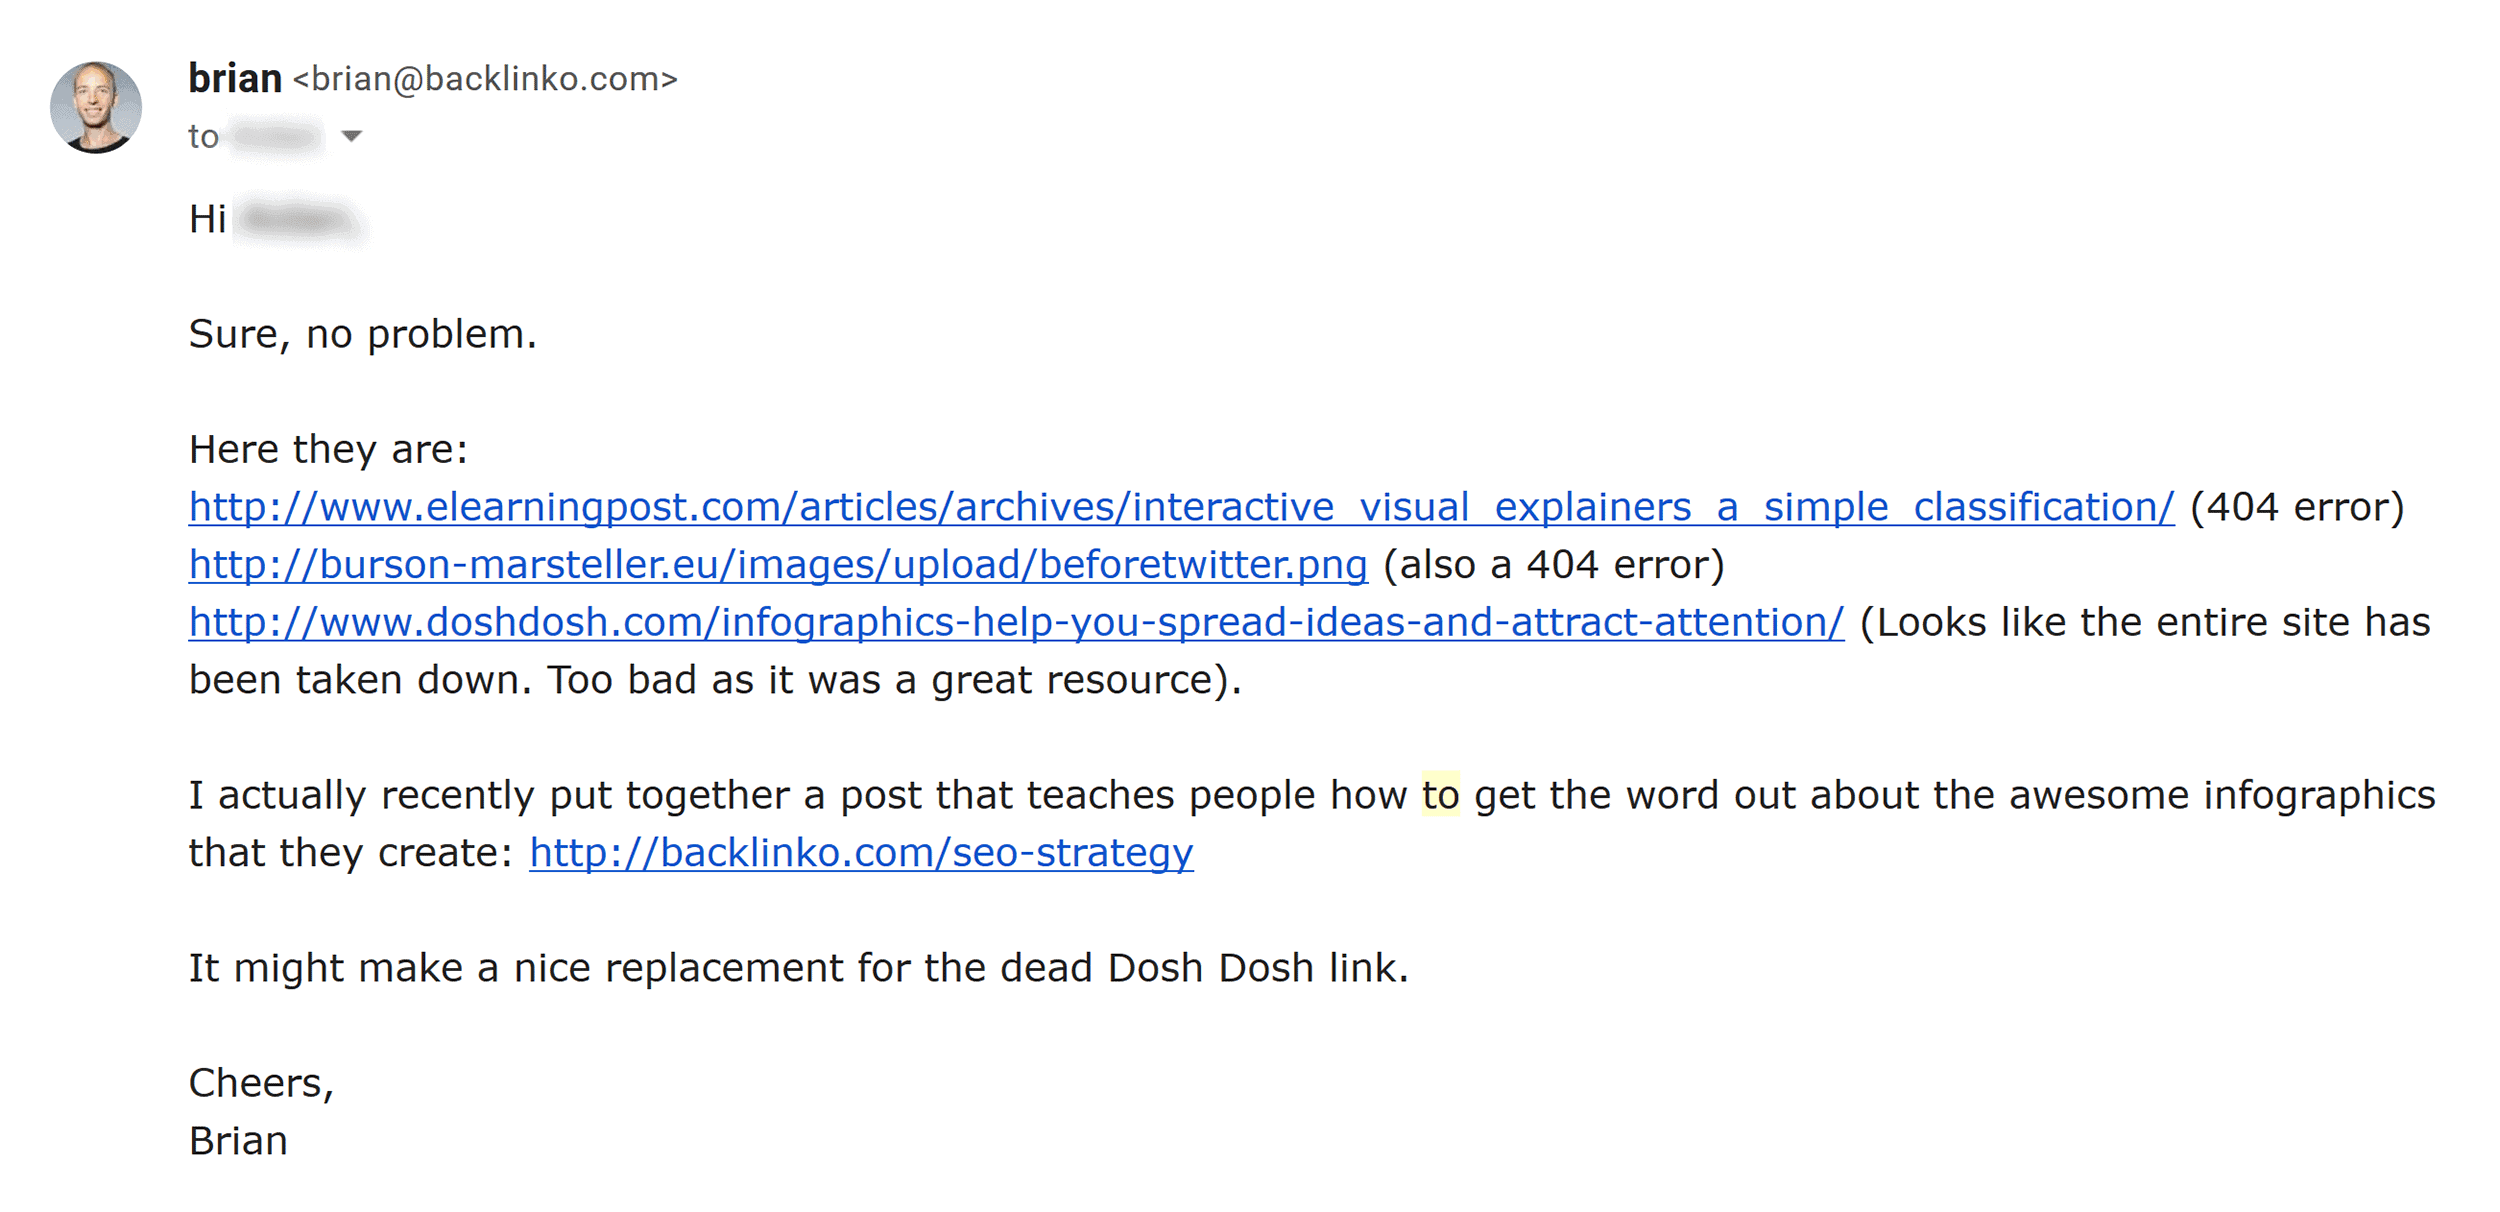 Super helpful email